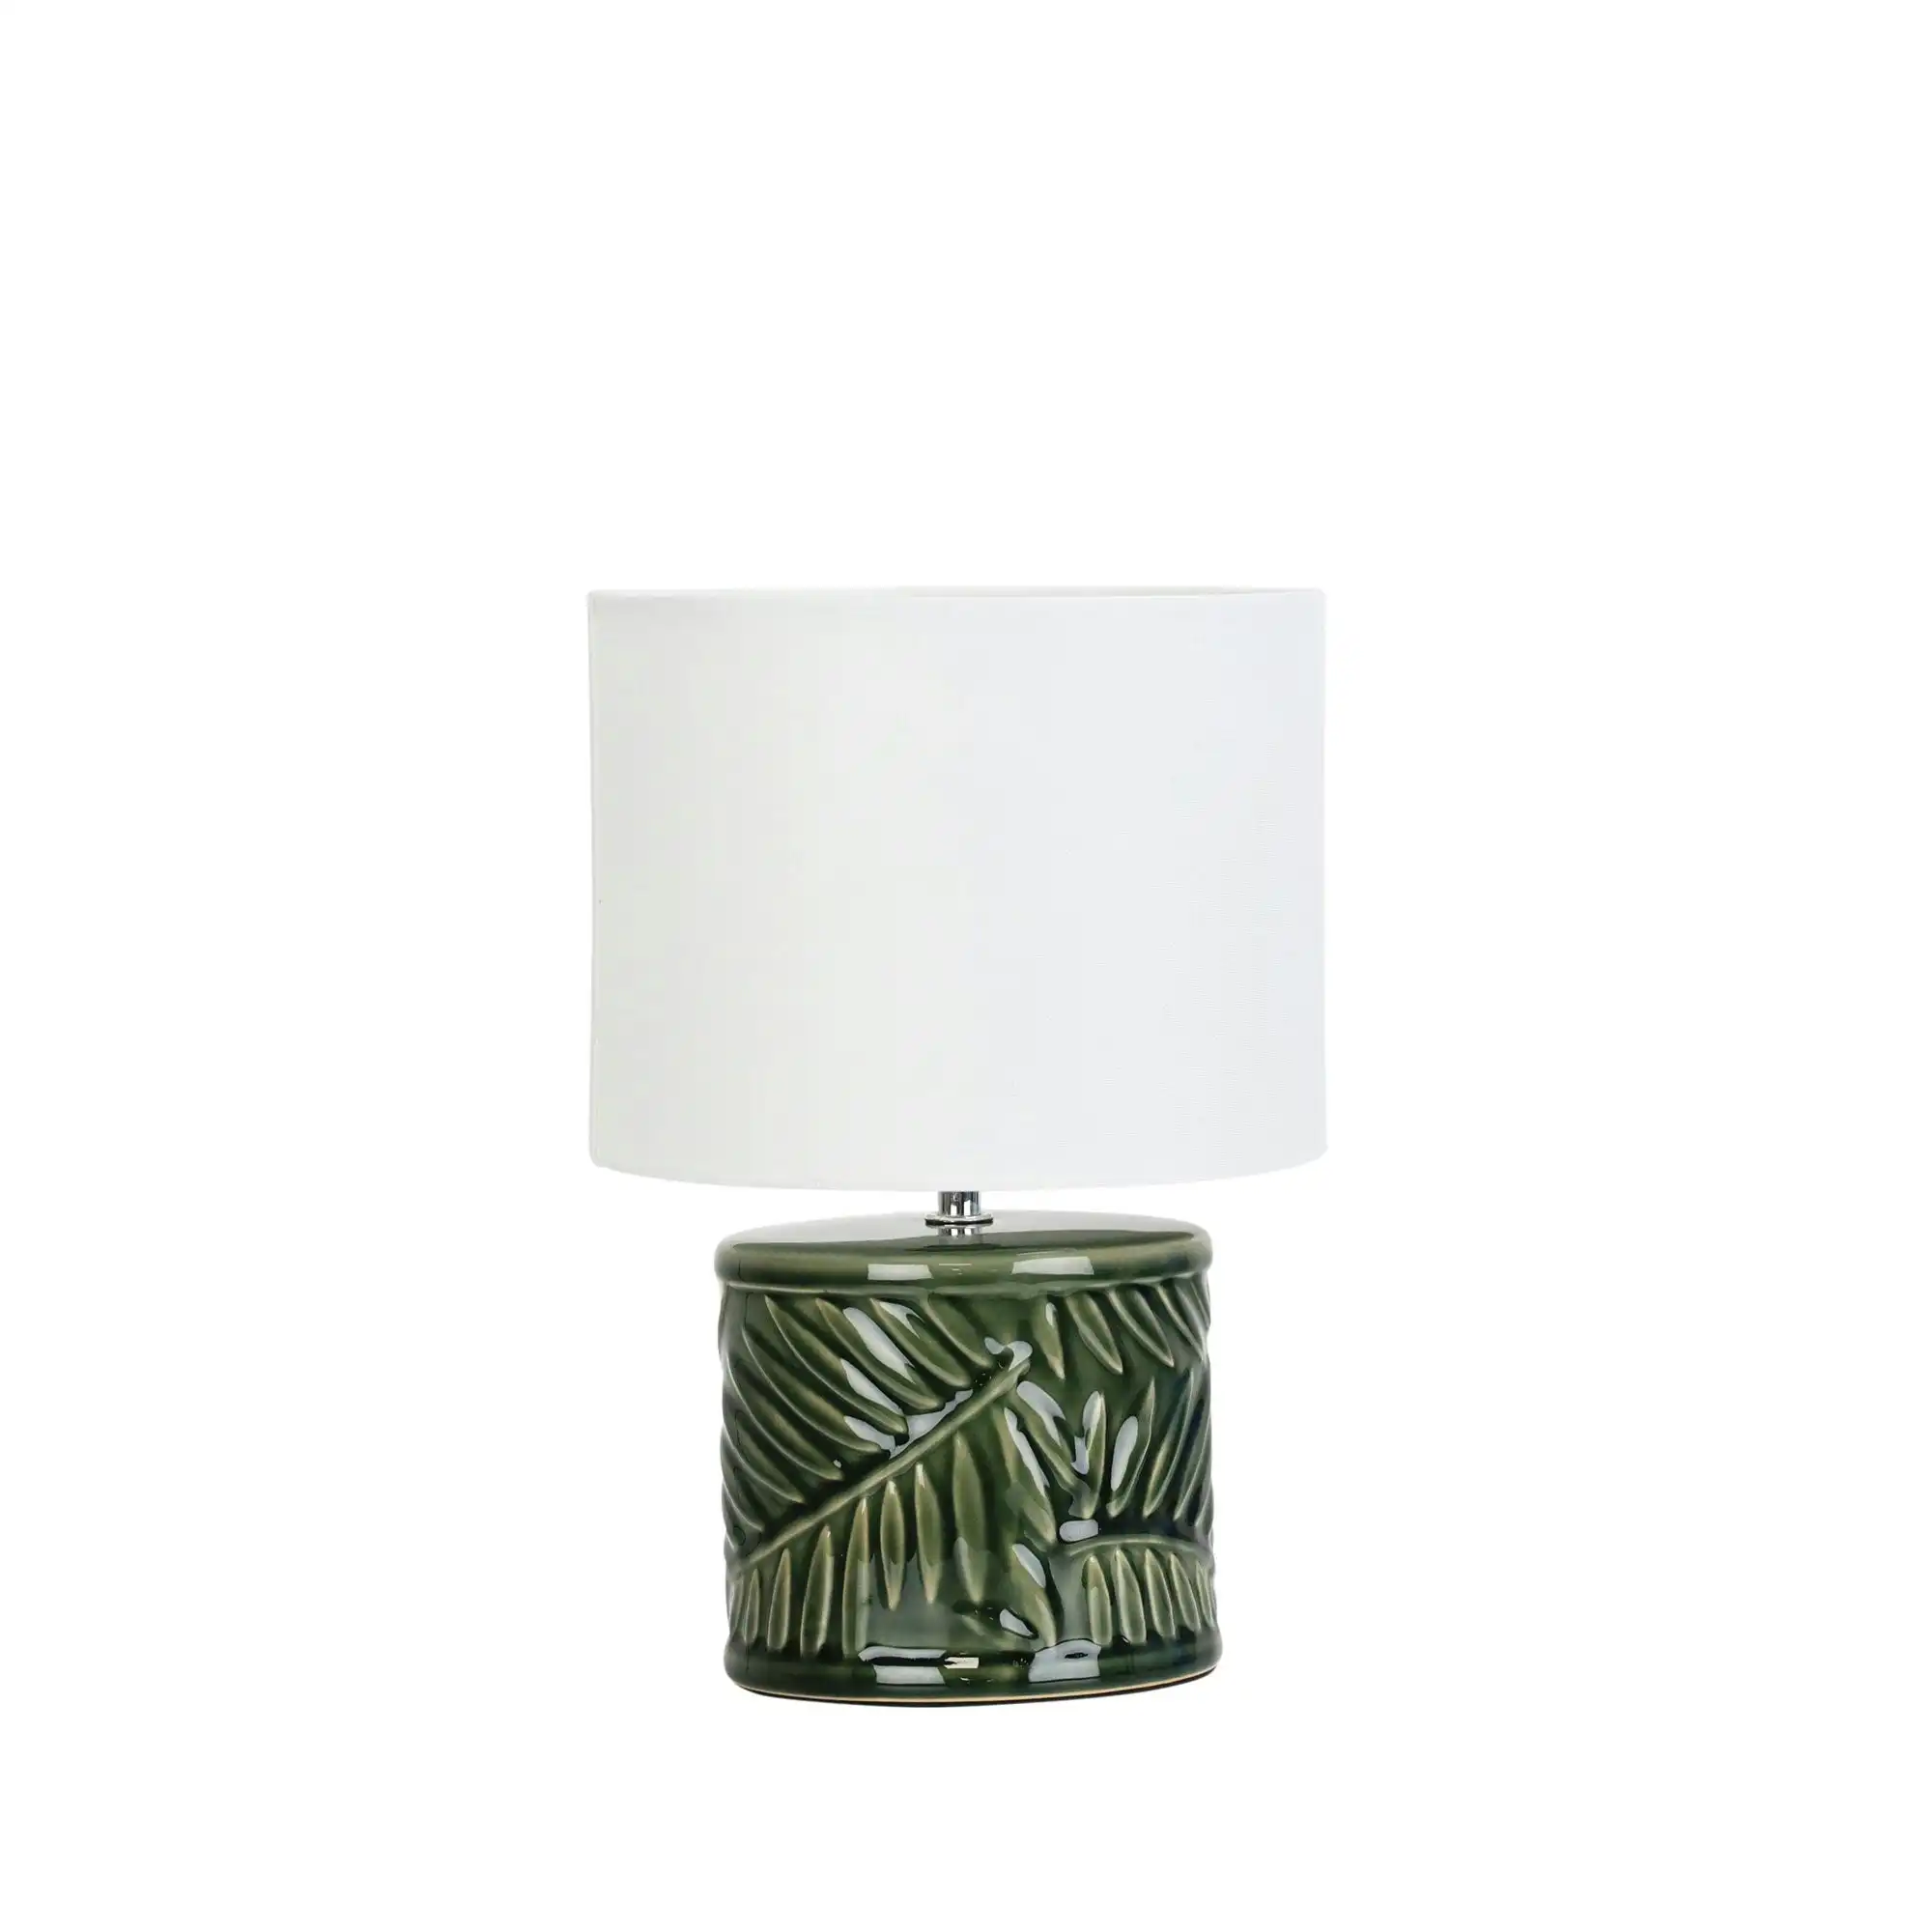 KAI Ceramic Table Lamp with Shade